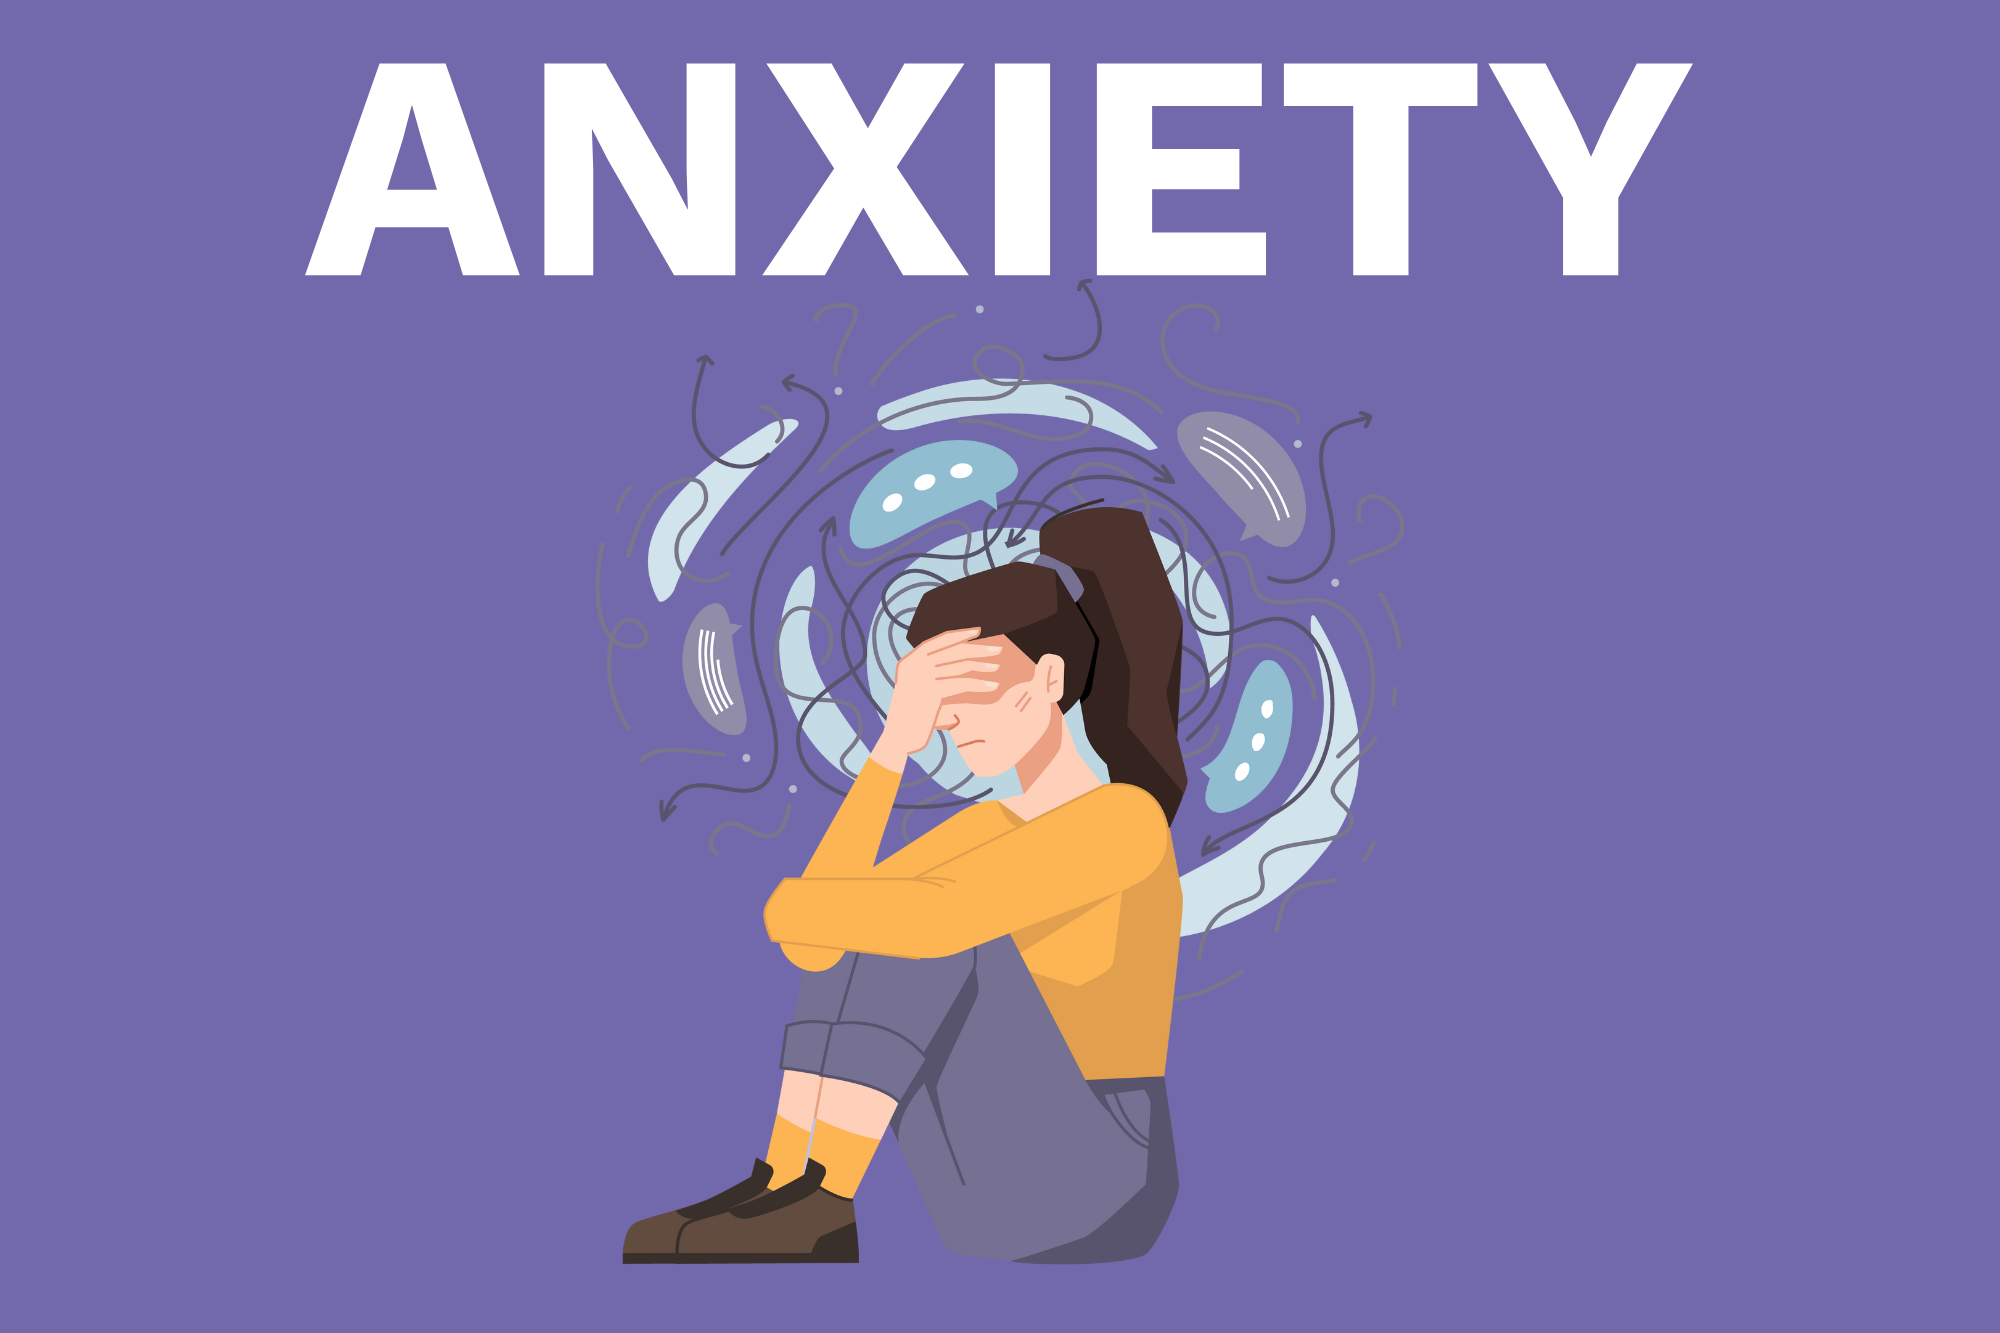 Overcoming anxiety